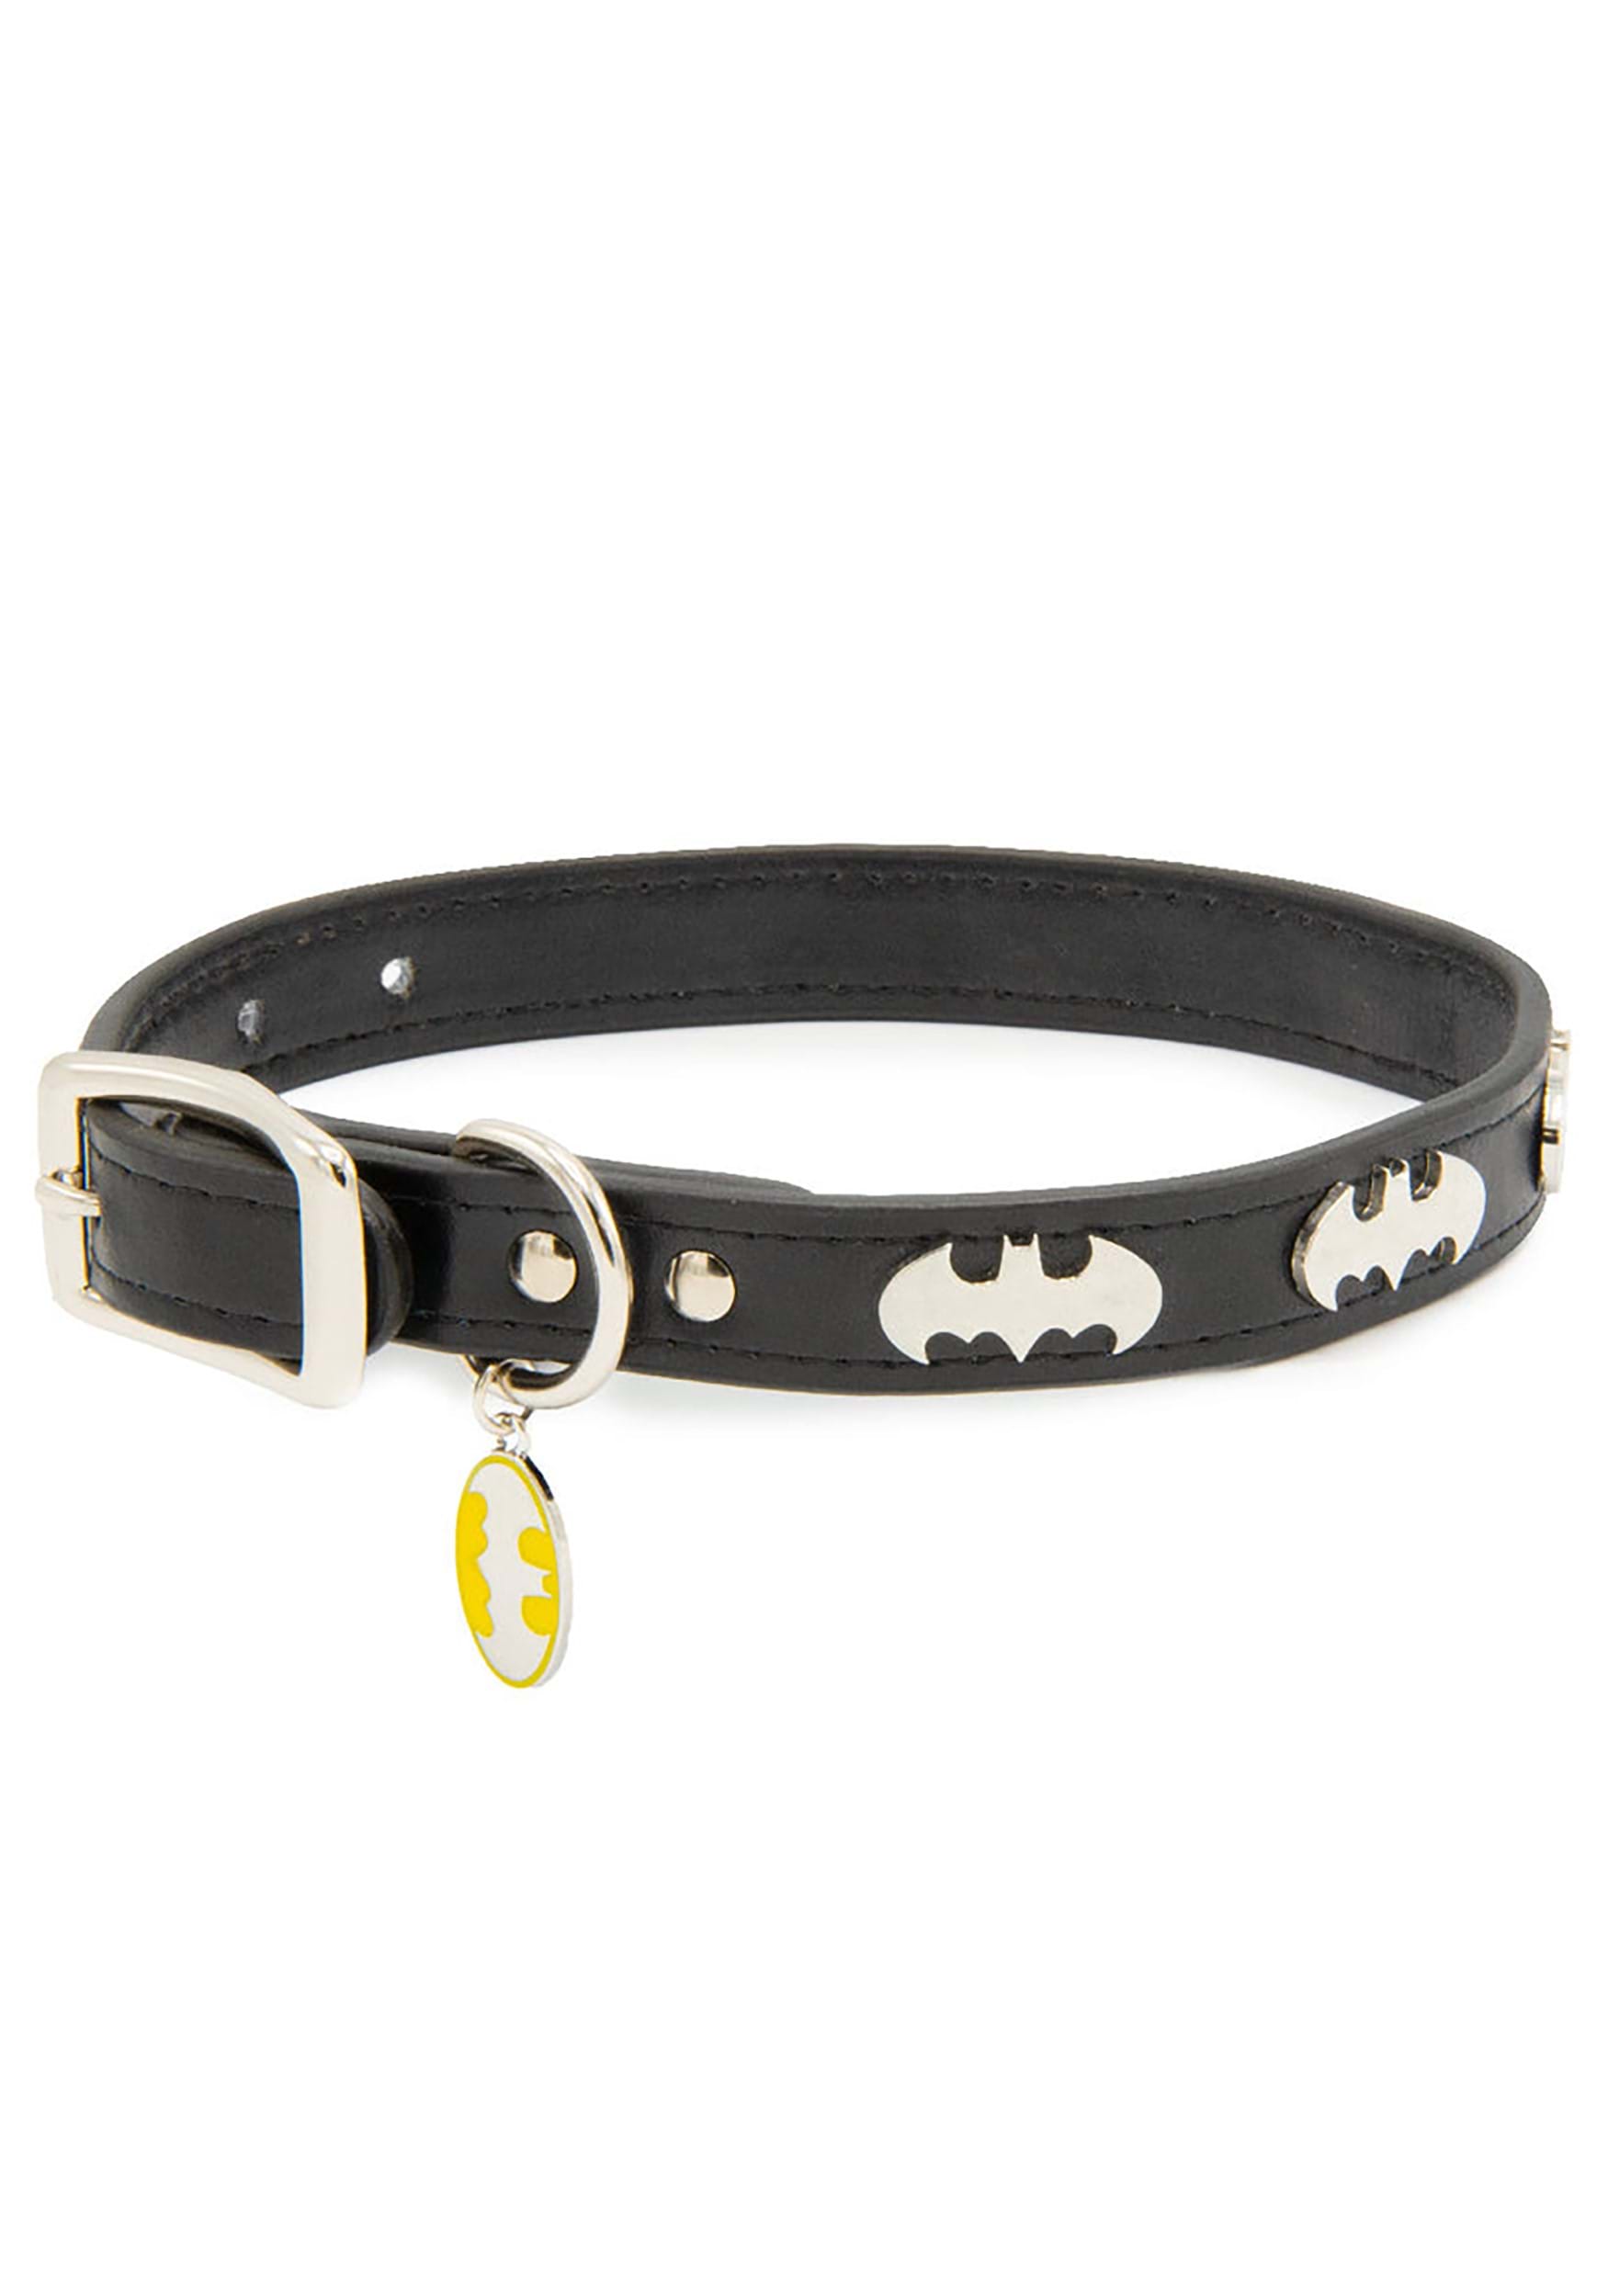 Batman Black with Bat Signal Embellishments Vegan Dog Collar